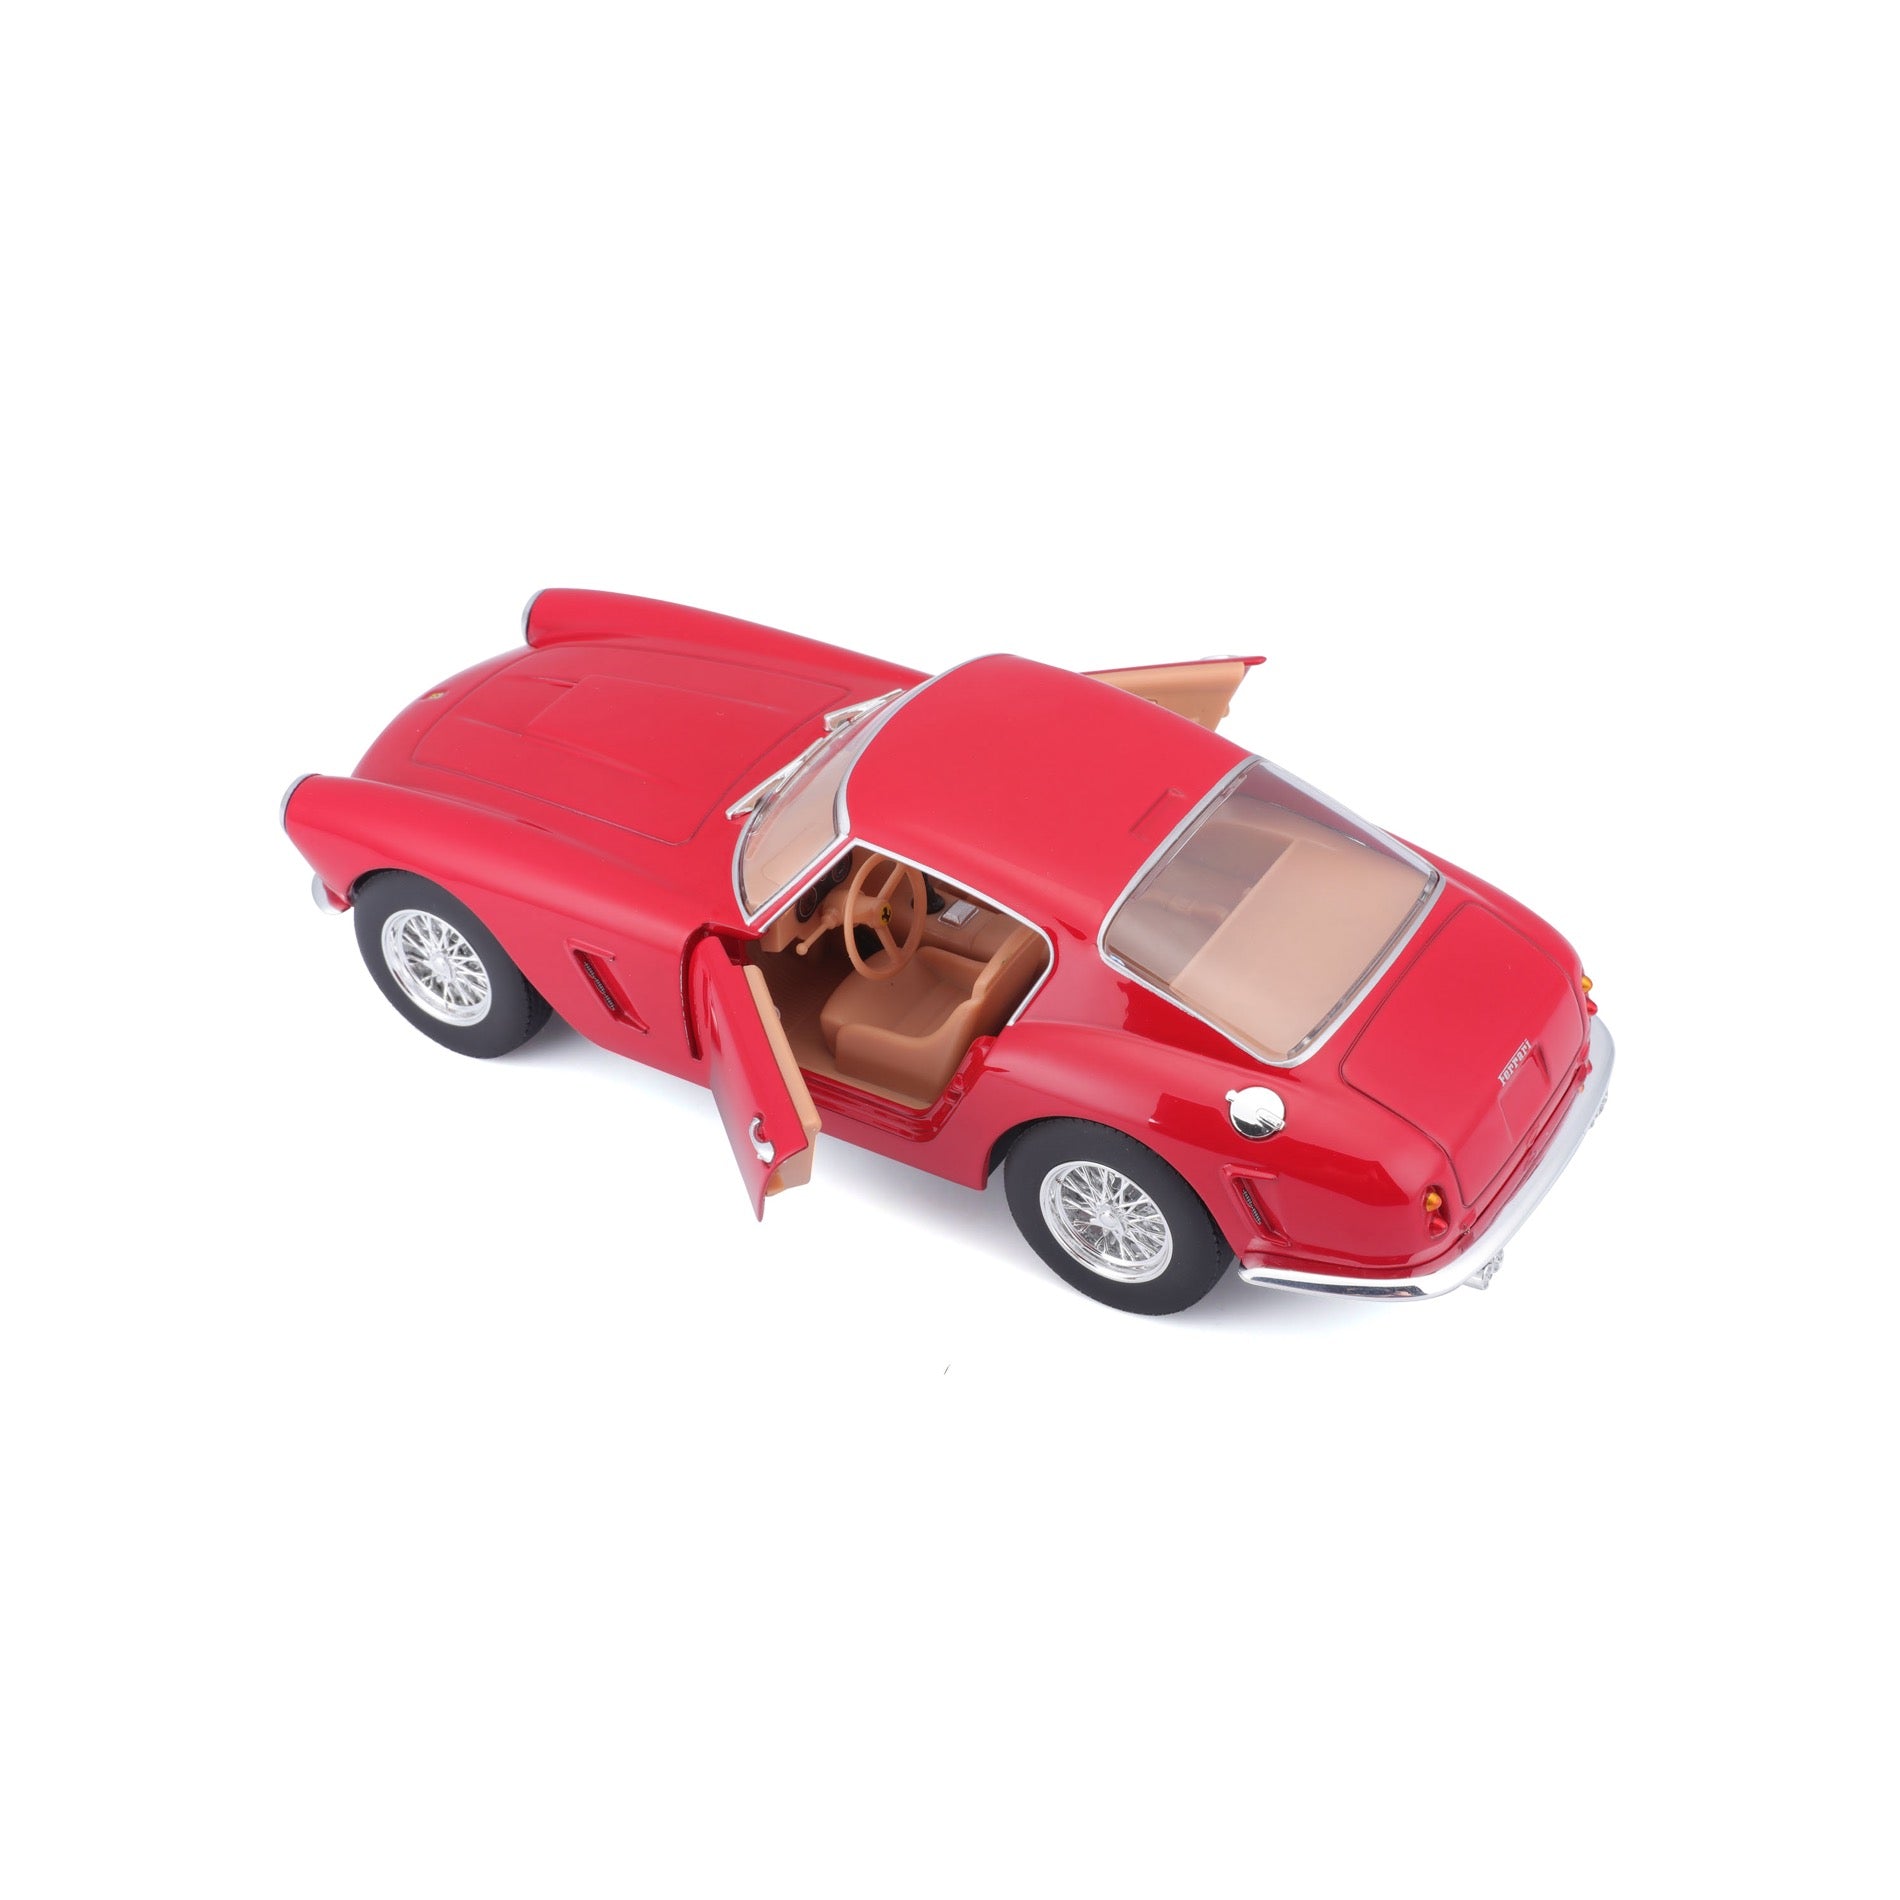 18-26025 Bburago Ferrari R&P- 250 GT B rosso - 1:24